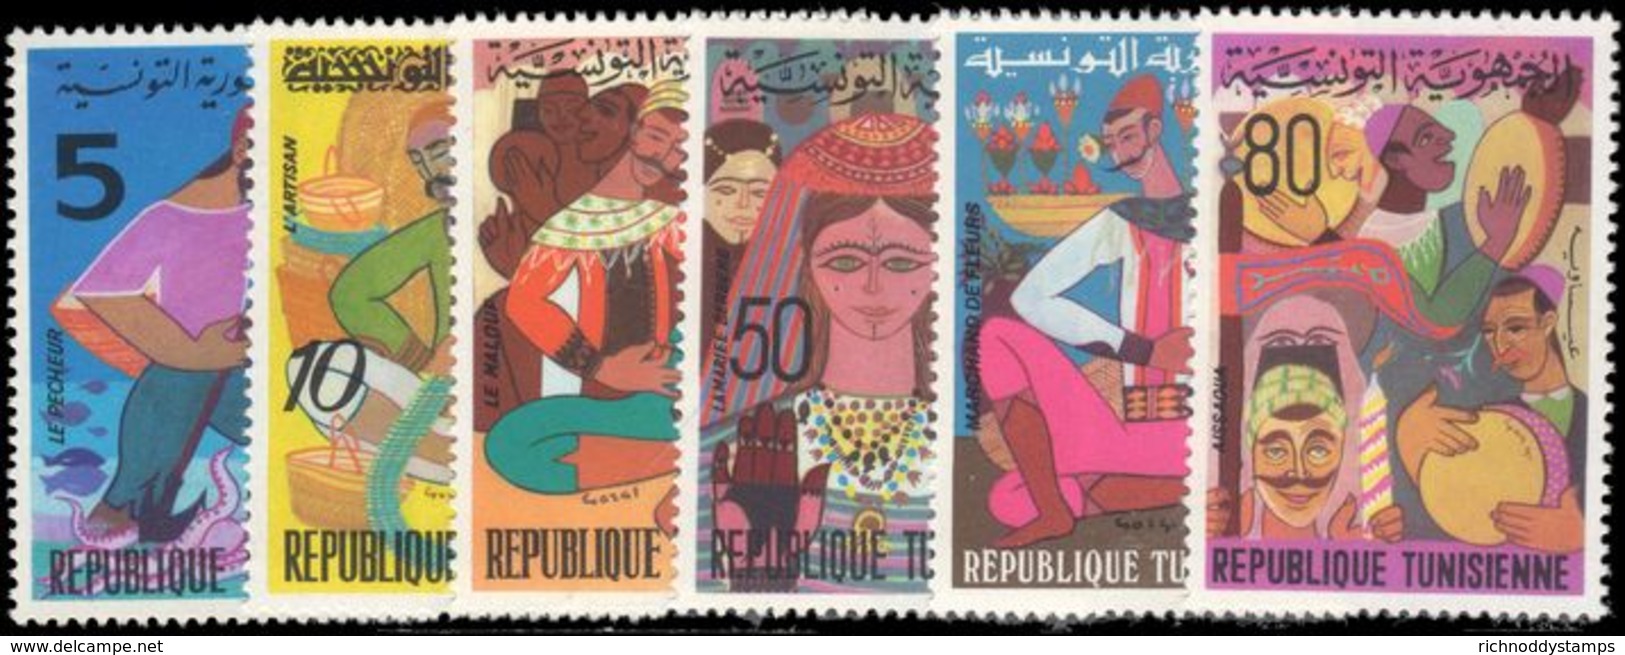 Tunisia 1972 Tunisian Life Unmounted Mint. - Tunisia (1956-...)